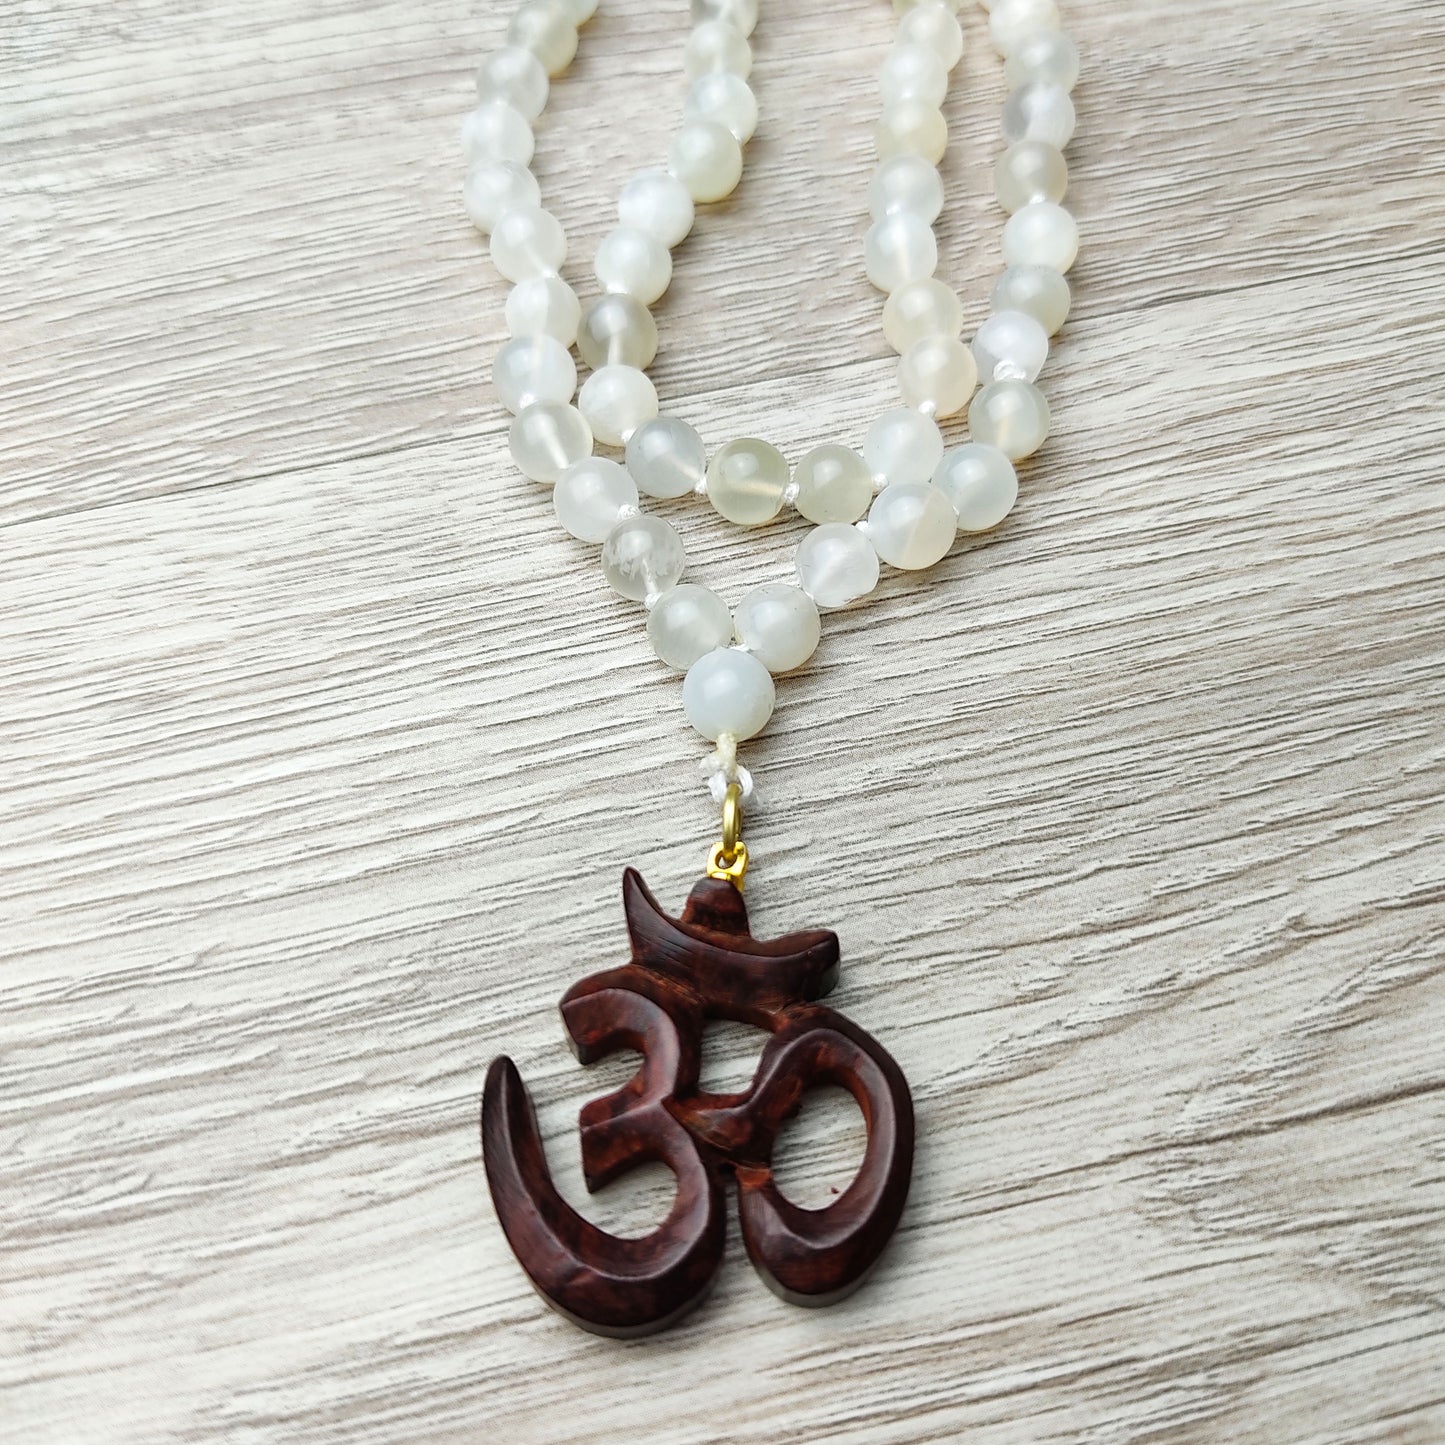 Rainbow Moonstone Beads Necklace with Rosewood Om Symbol Pendant Yoga Gift